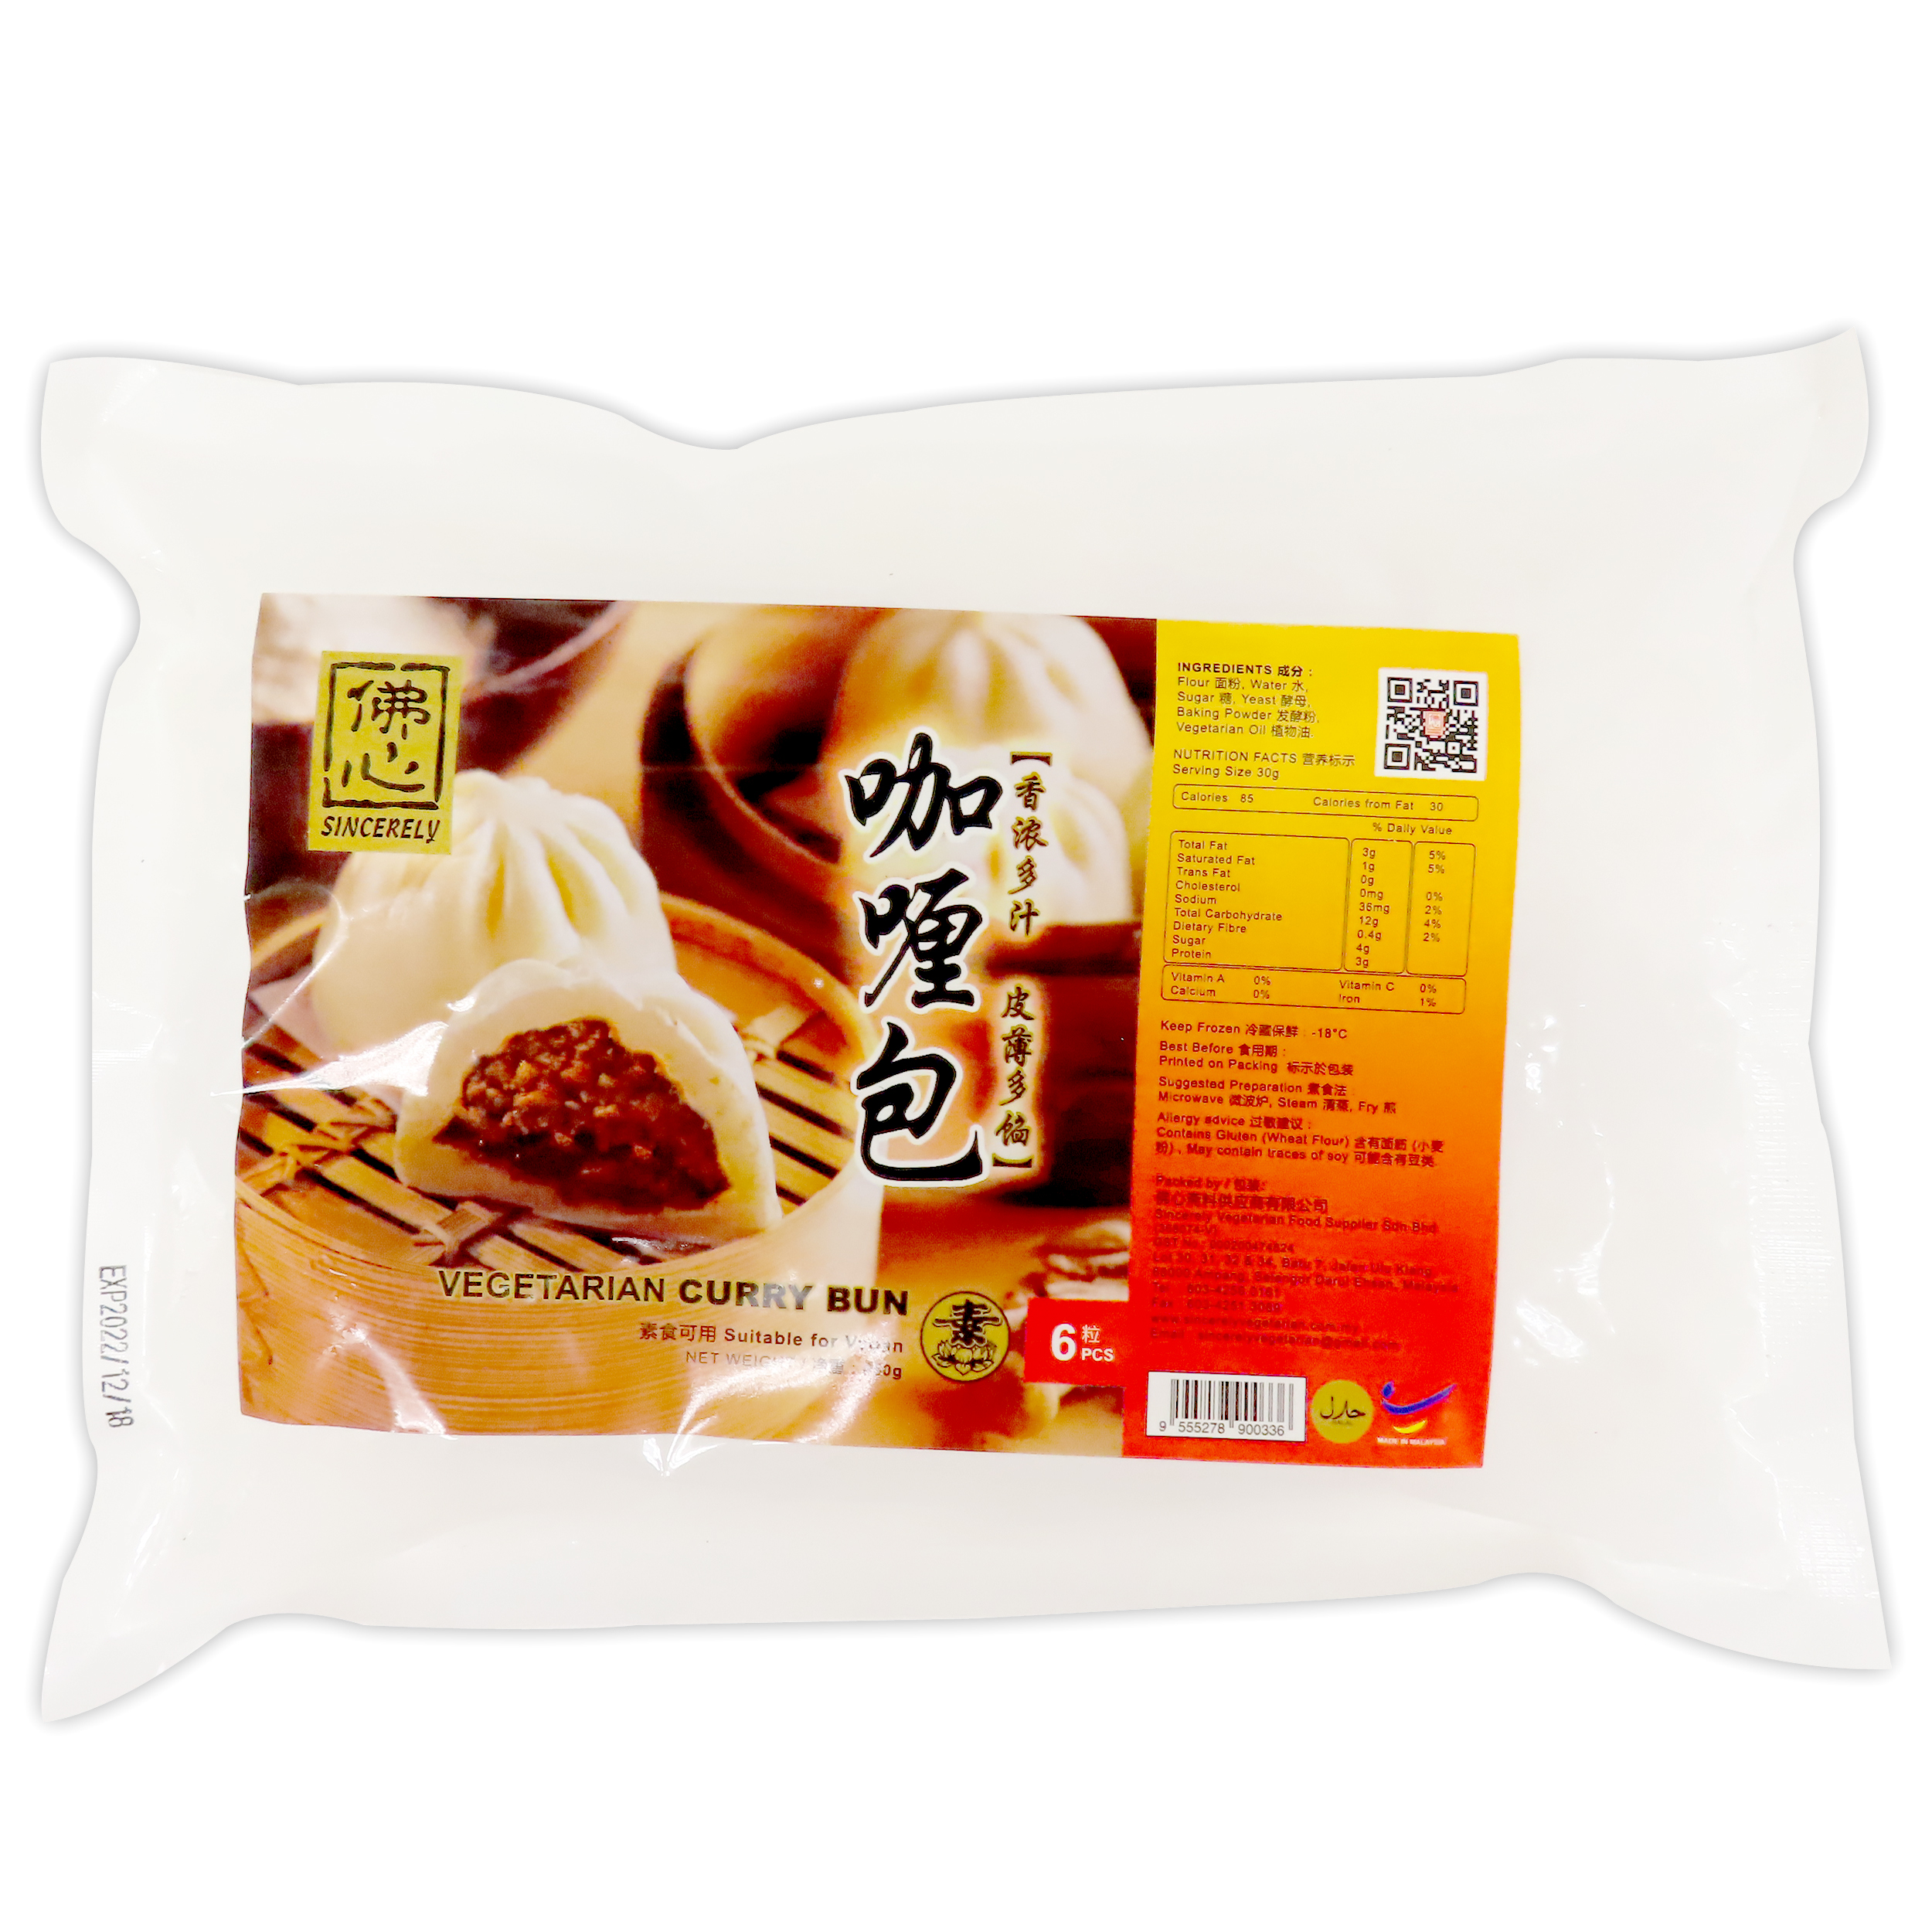 Image Sincerely vegan Curry Pau 佛心 - 咖喱包 （6pieces） 450grams